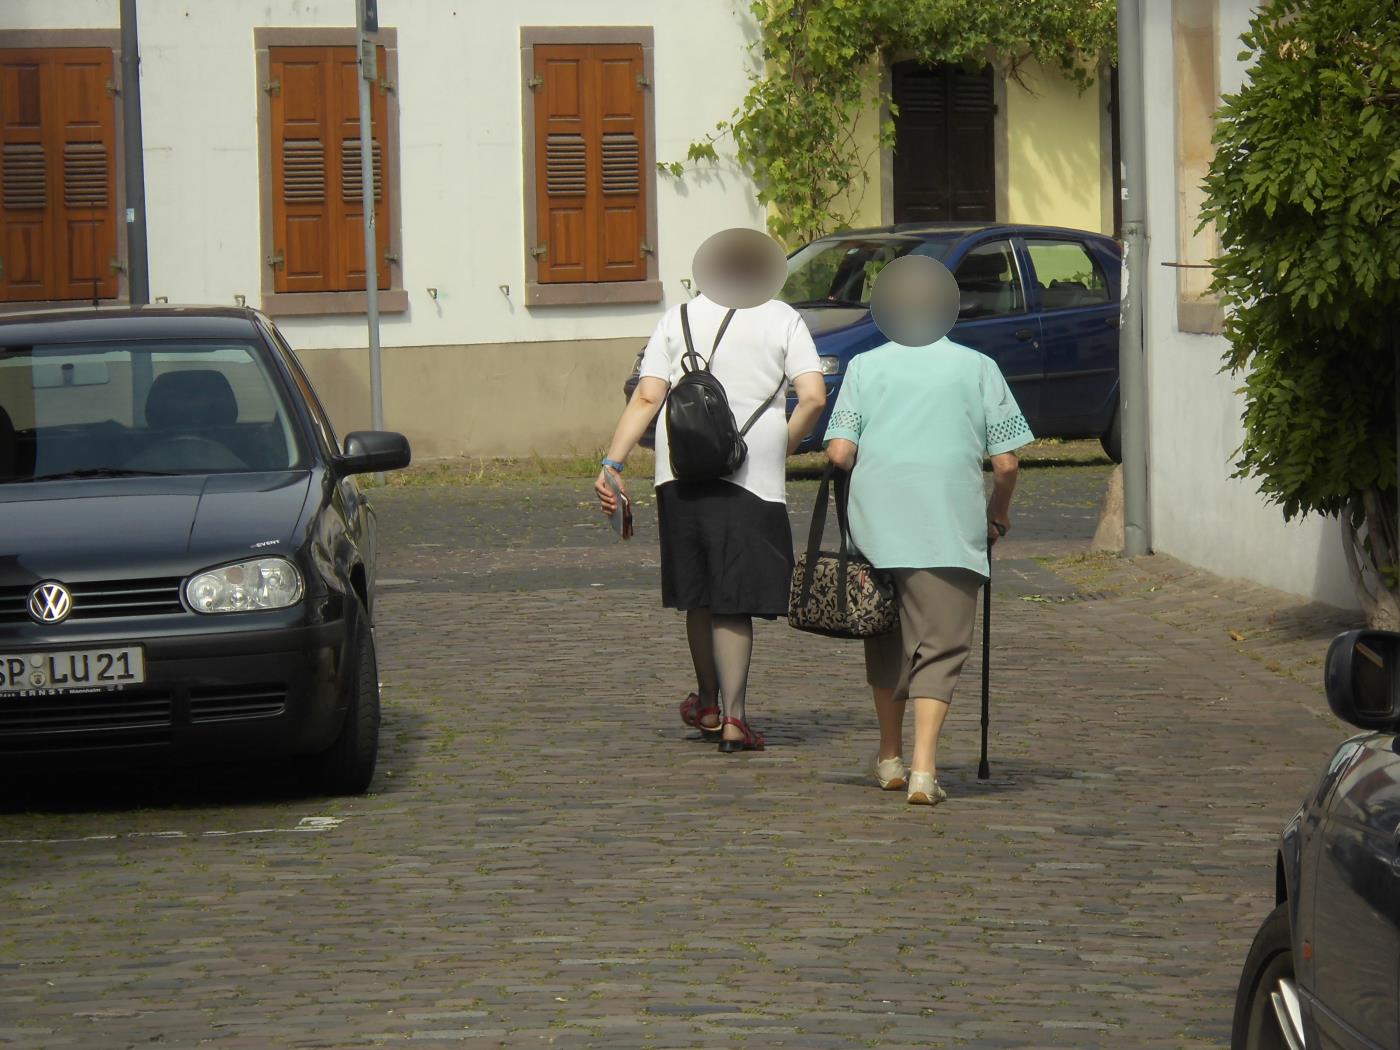 Dann doch zwei Aktivistinnen Jehovas in Speyer